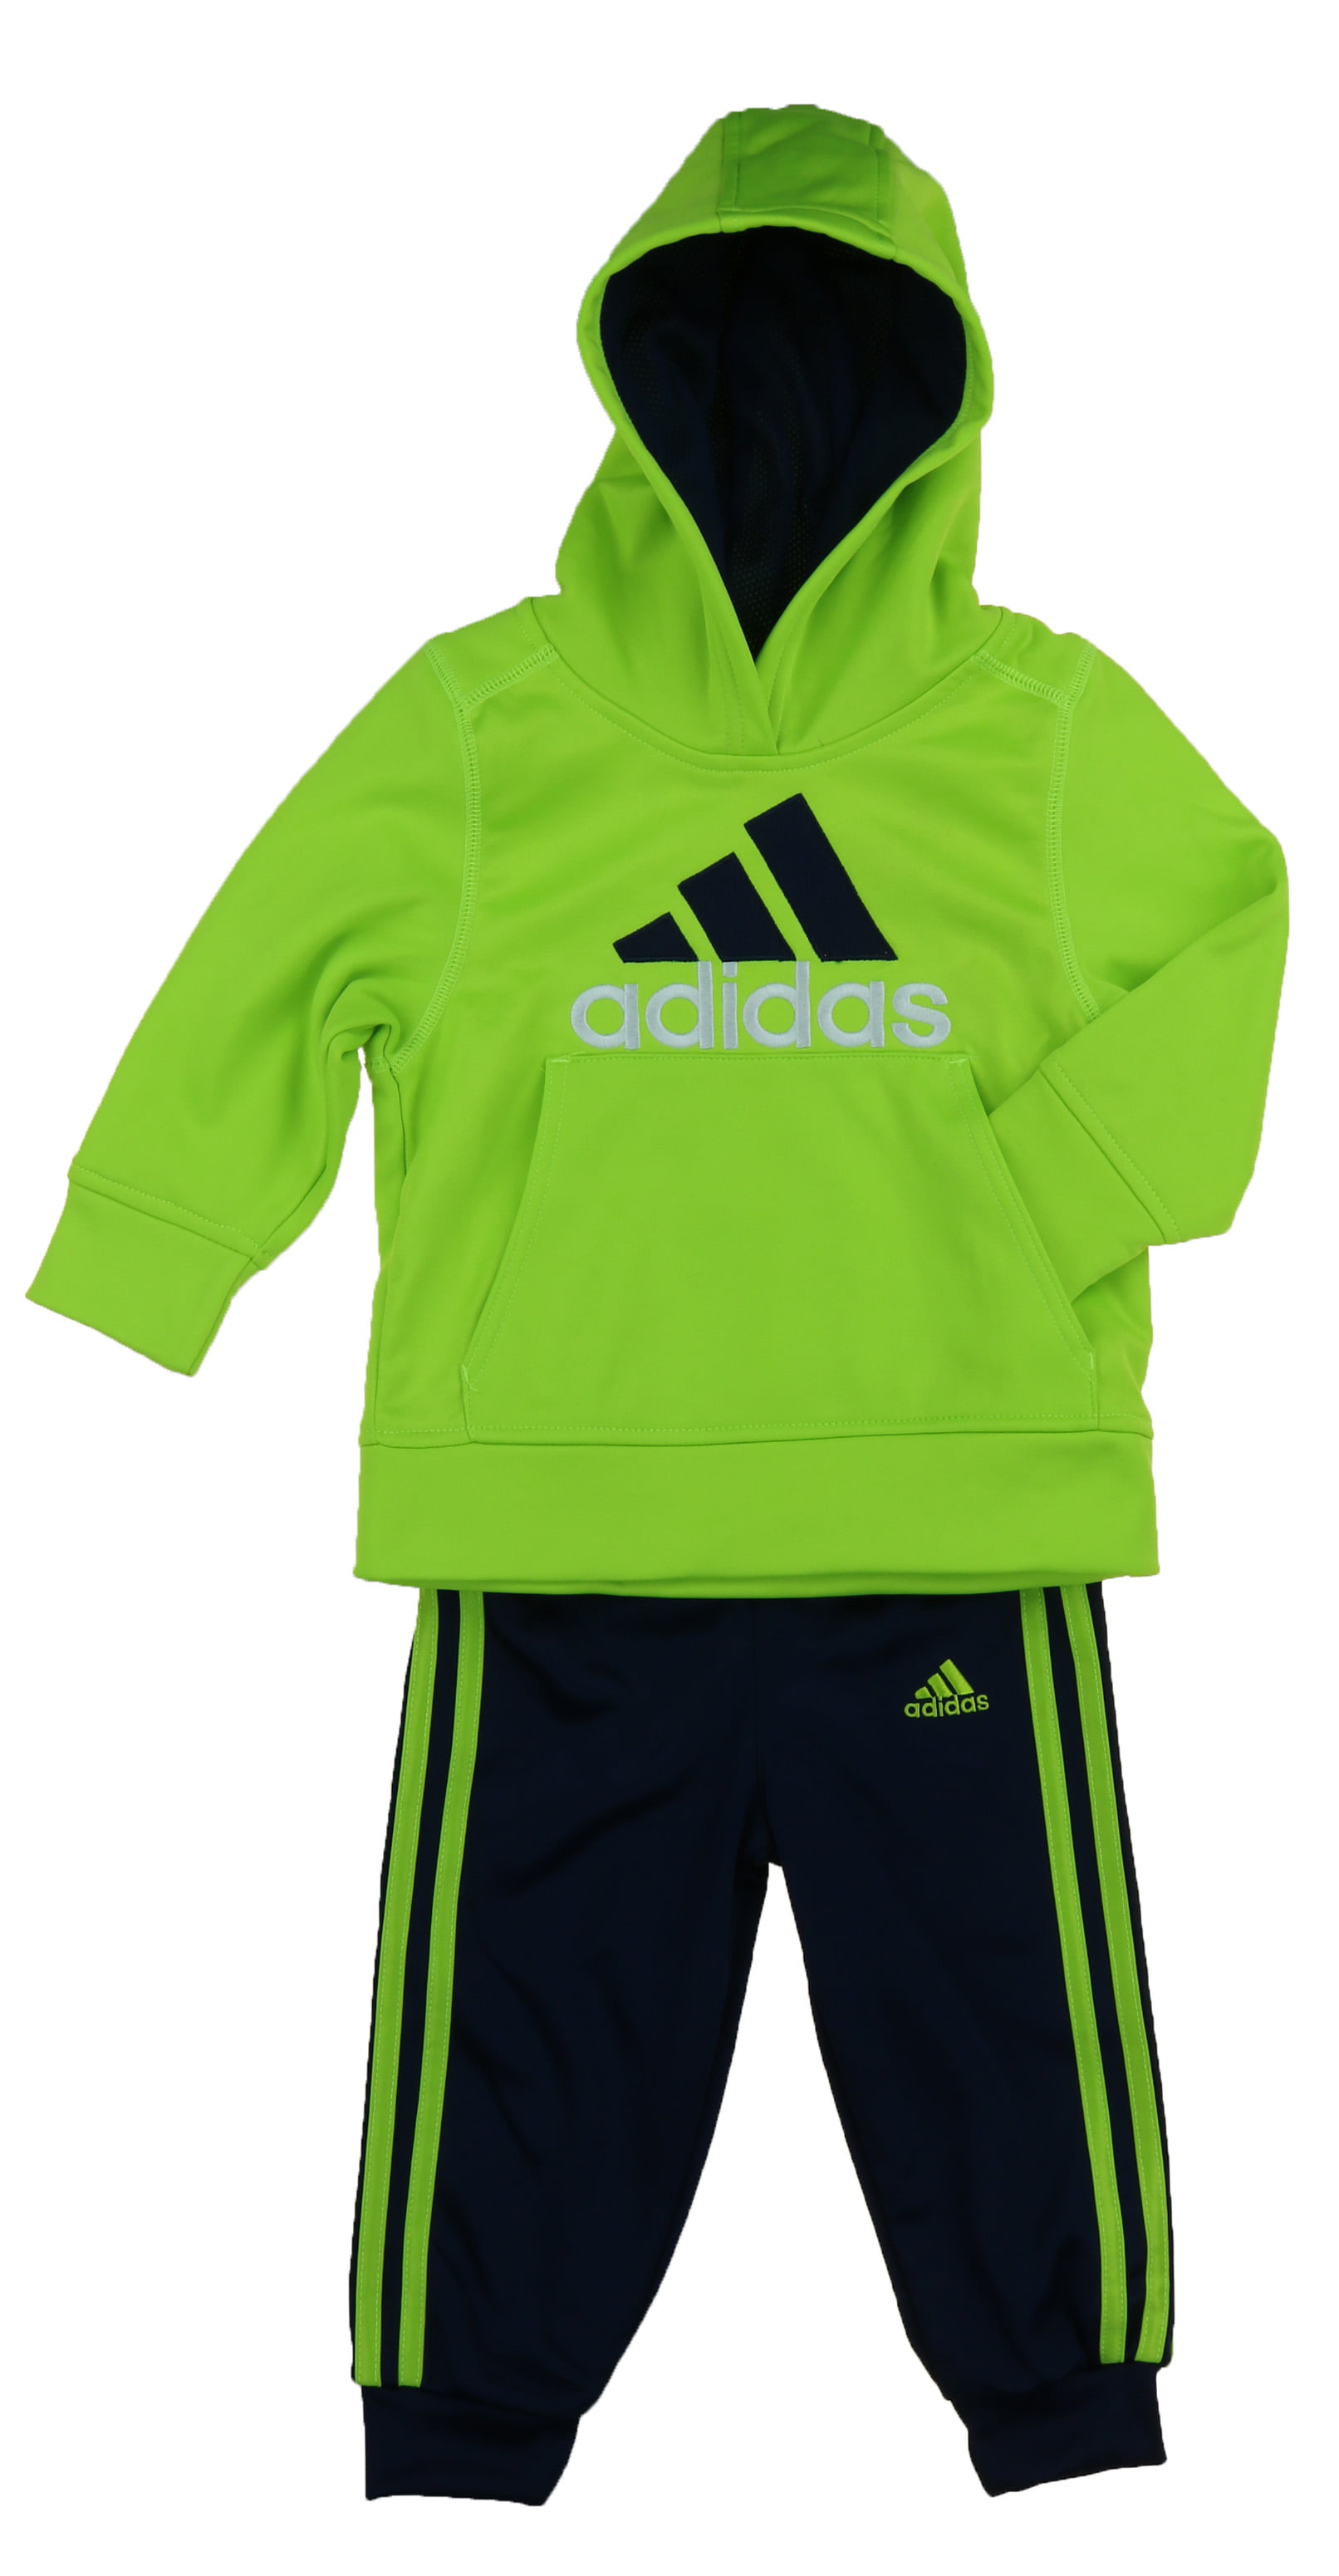 Adidas - ADIDAS Little Boys Tracksuit Sweat Suit Active Wear 2-Piece